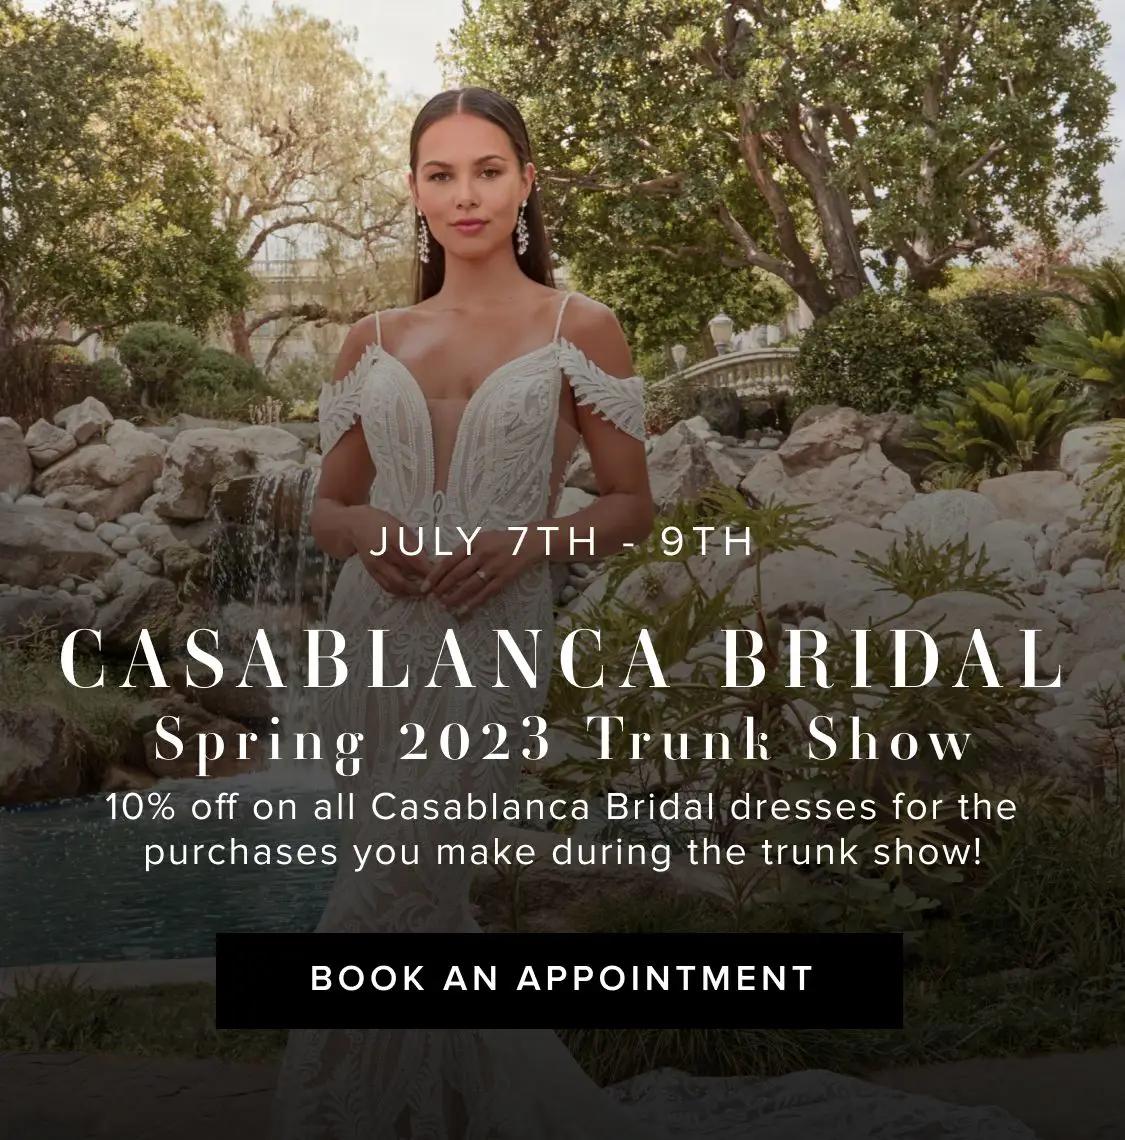 "Casablanca Bridal Spring 2023 Trunk Show" banner for mobile